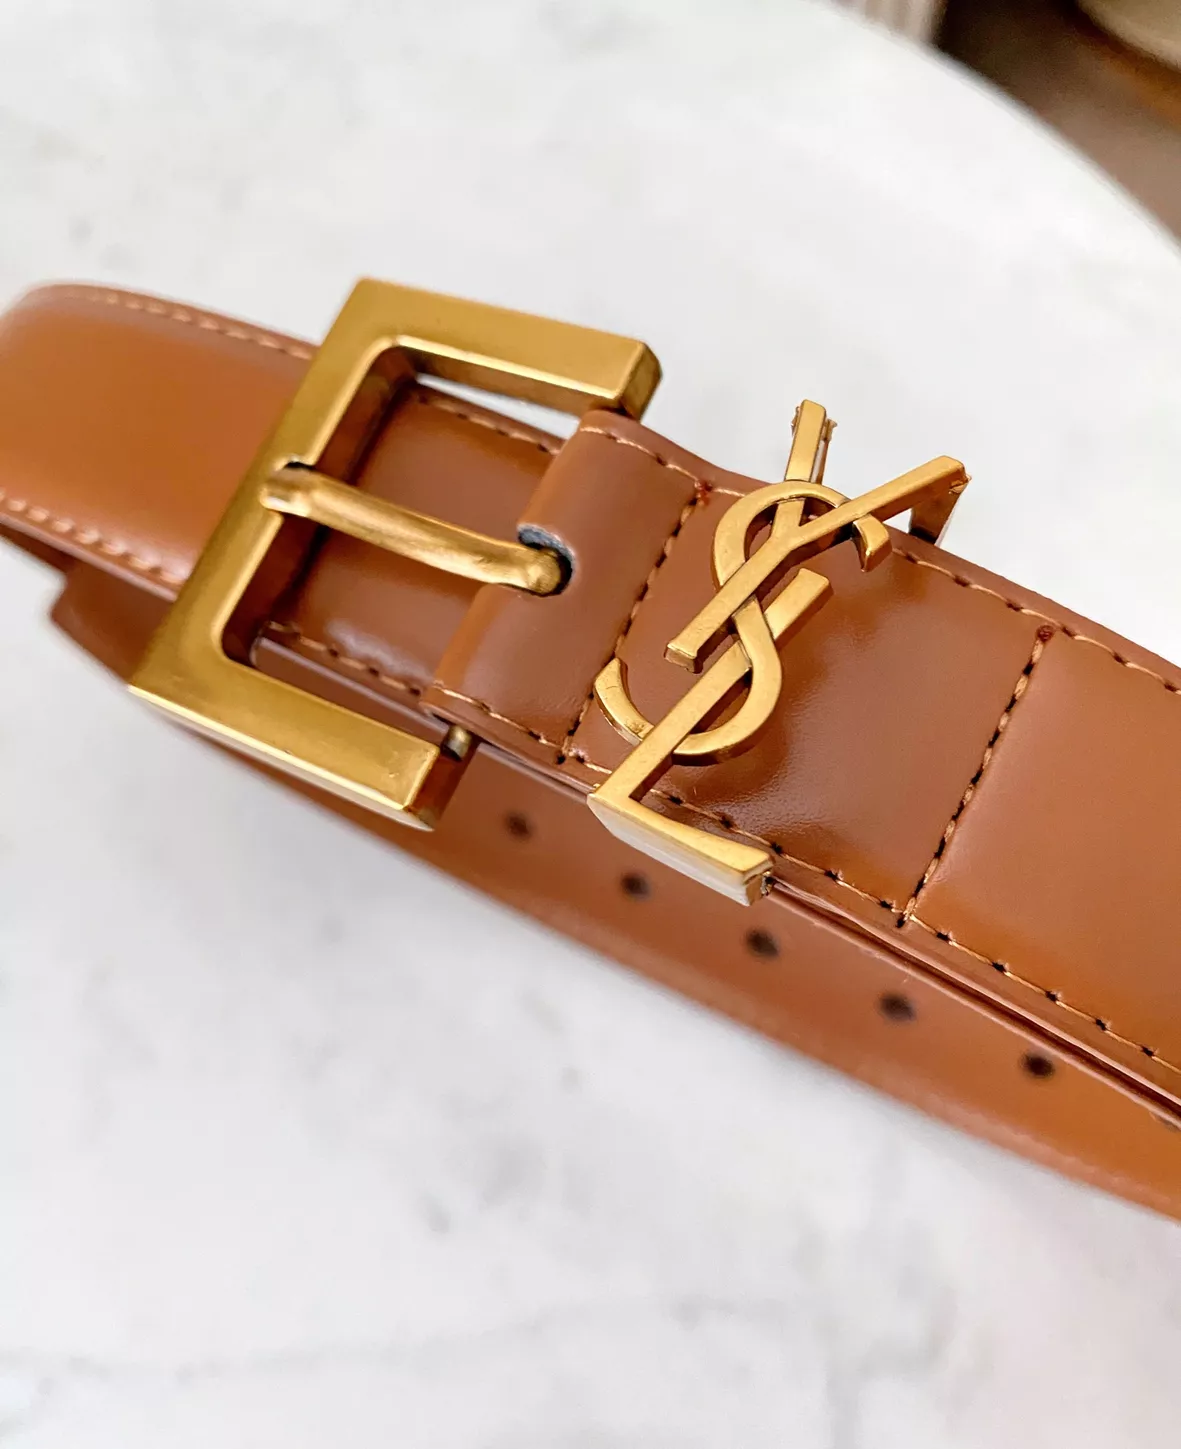 Saint Laurent Monogram Leather Belt